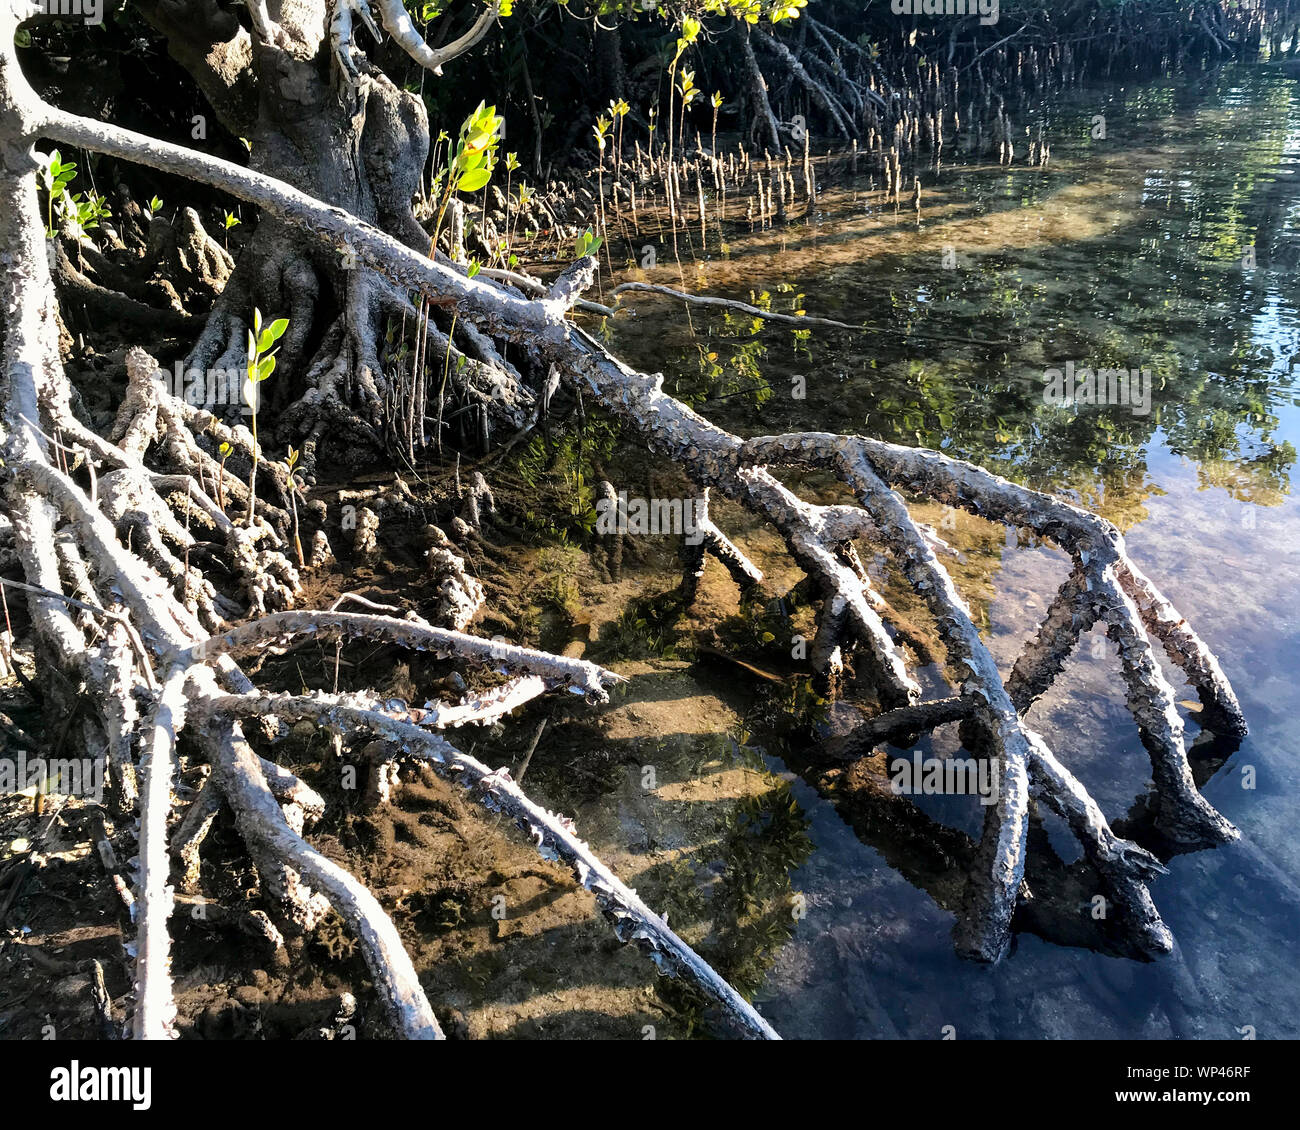 Mangrovie Rhizophora prop radici e Avicennia pneumatofori in una foresta nel sud del Madagascar Foto Stock